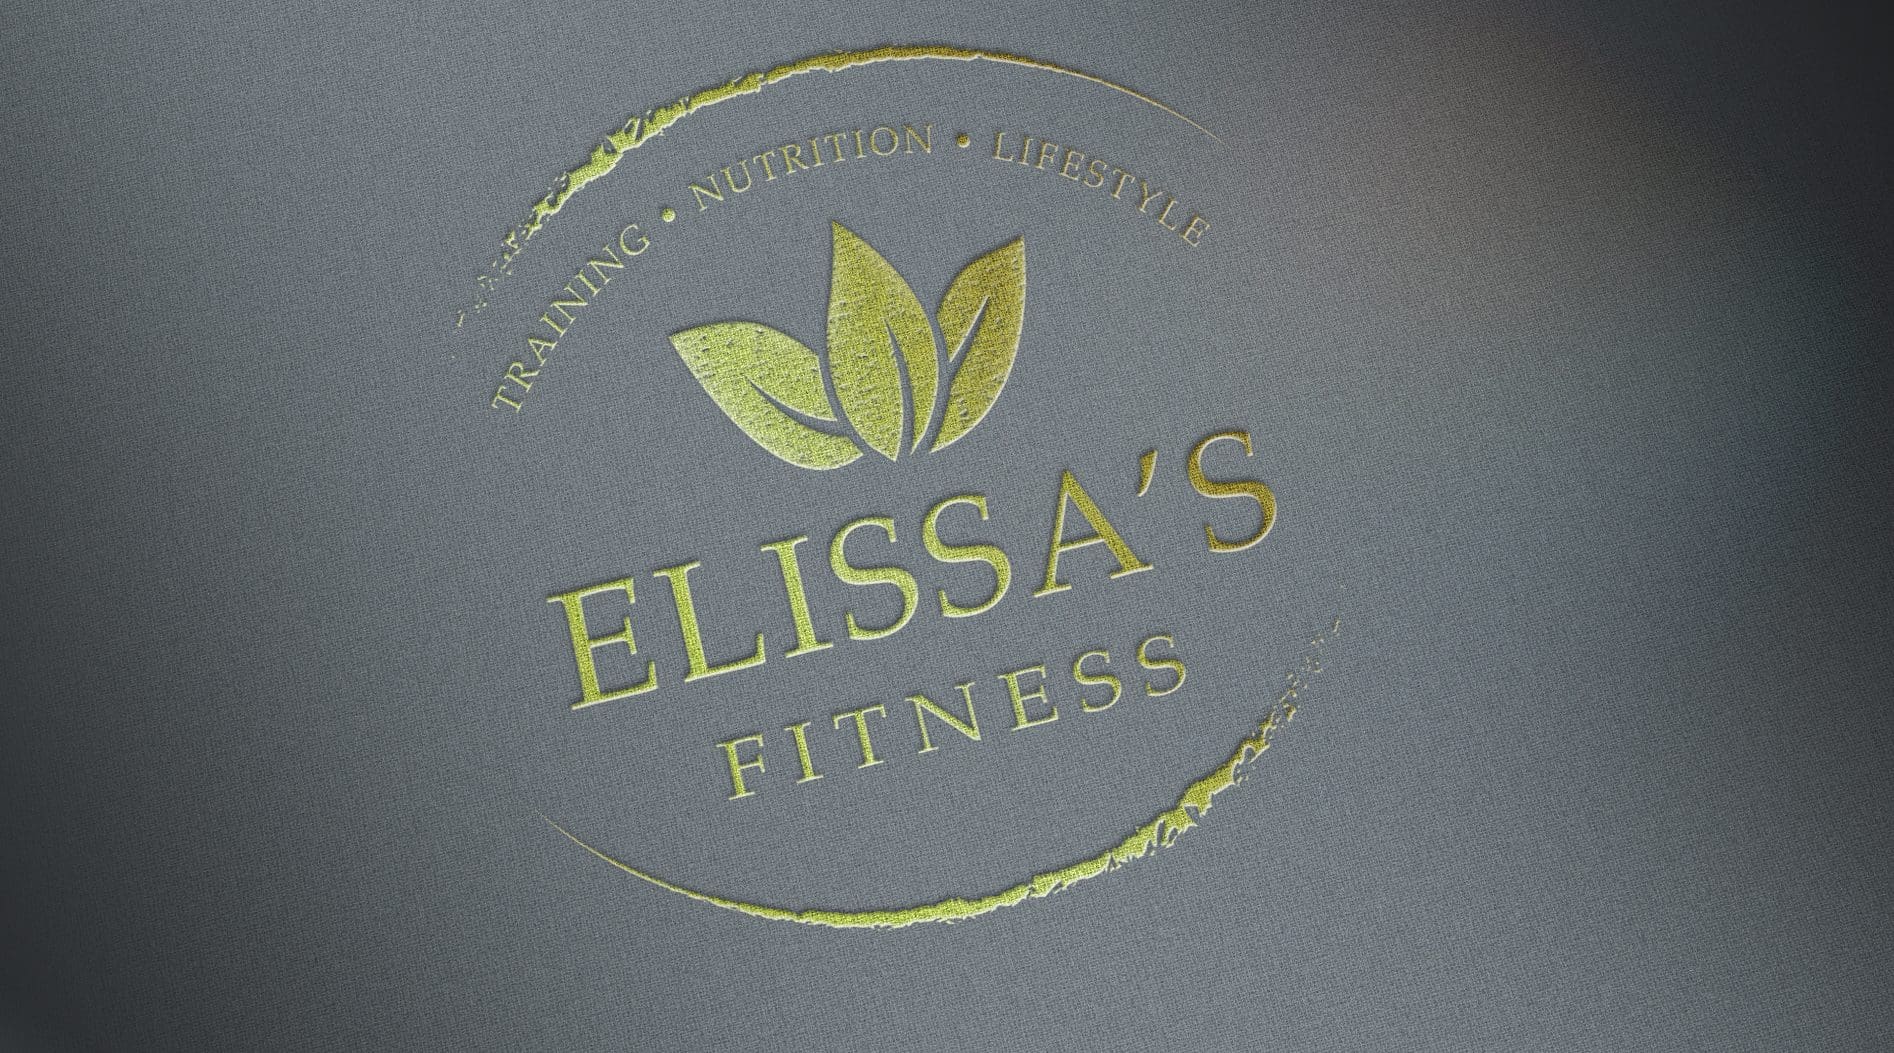 Elissas Fitness - Logo